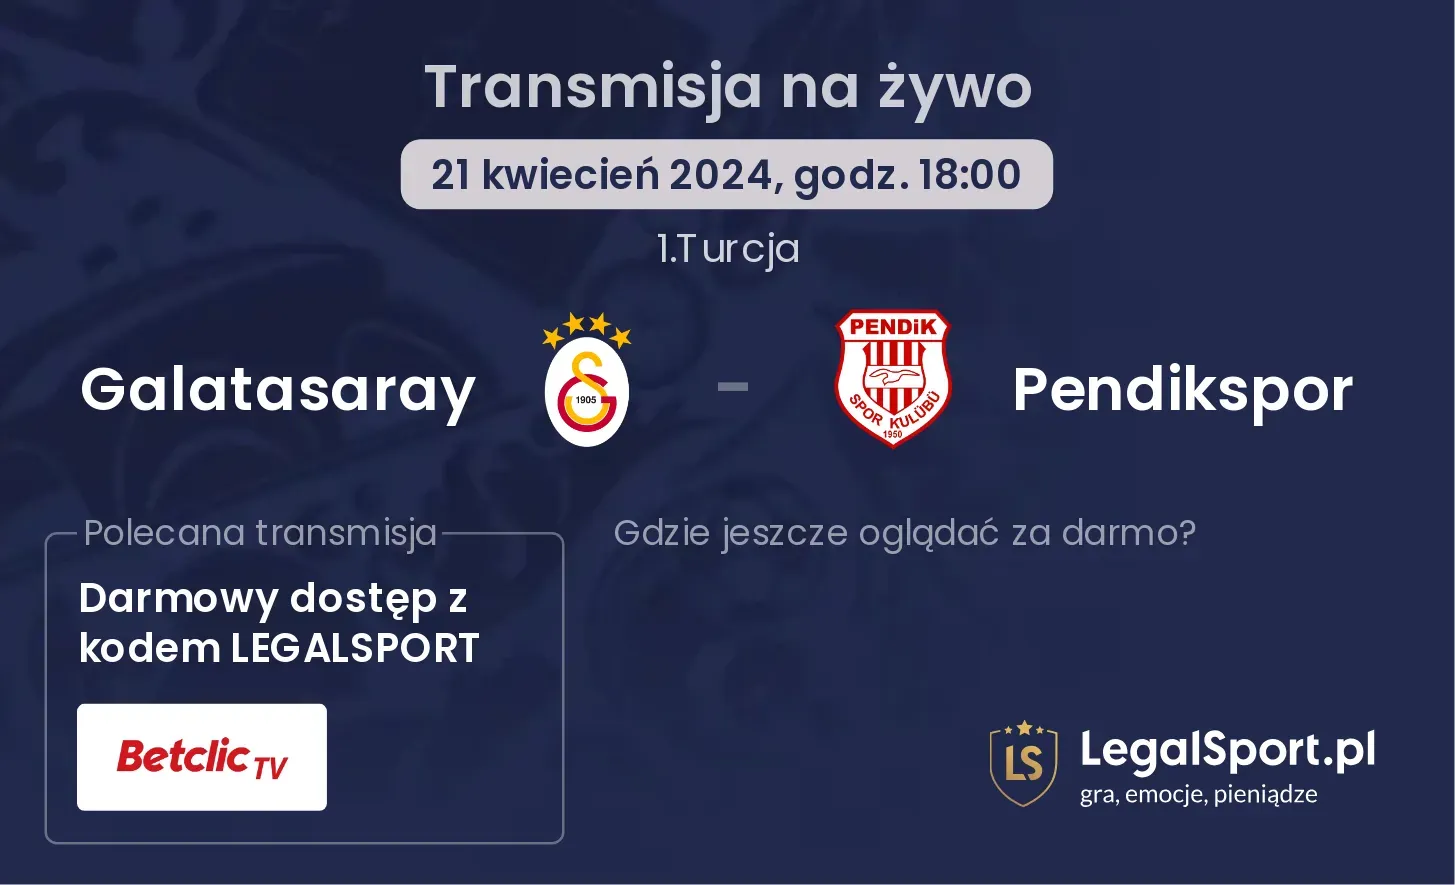 Galatasaray - Pendikspor transmisja na żywo